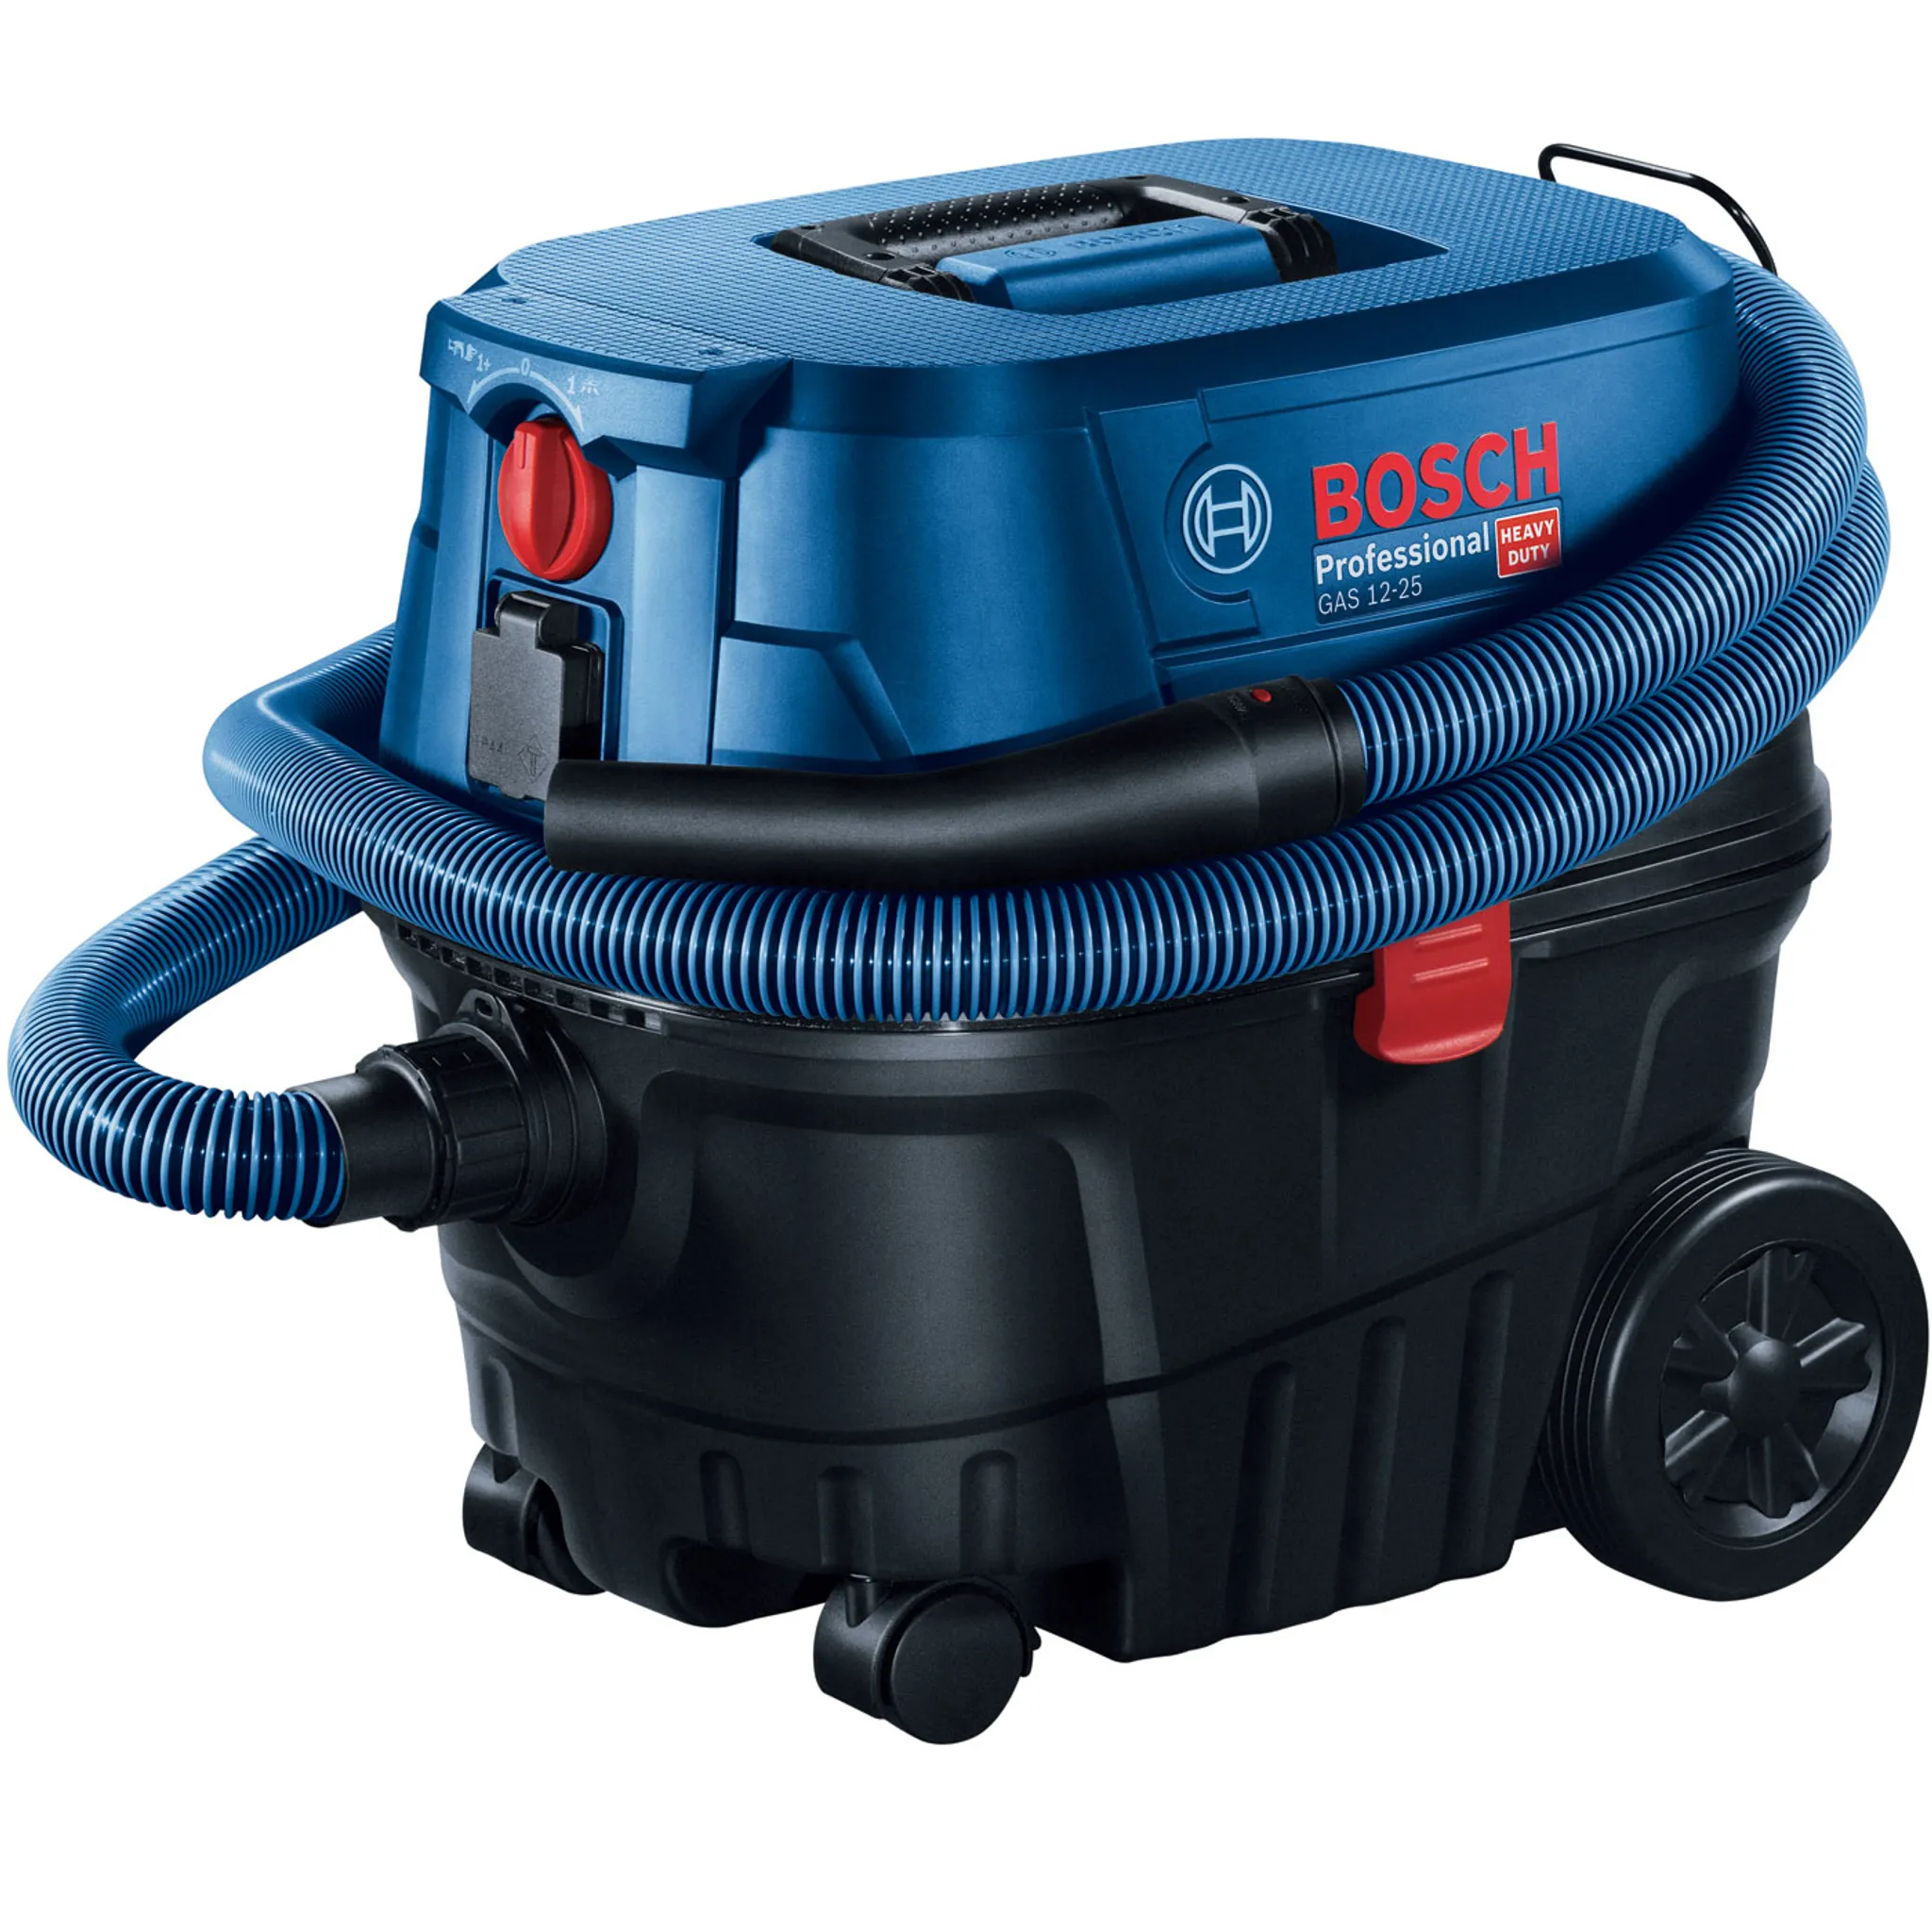 GAS 12-25 Bosch Professional PL